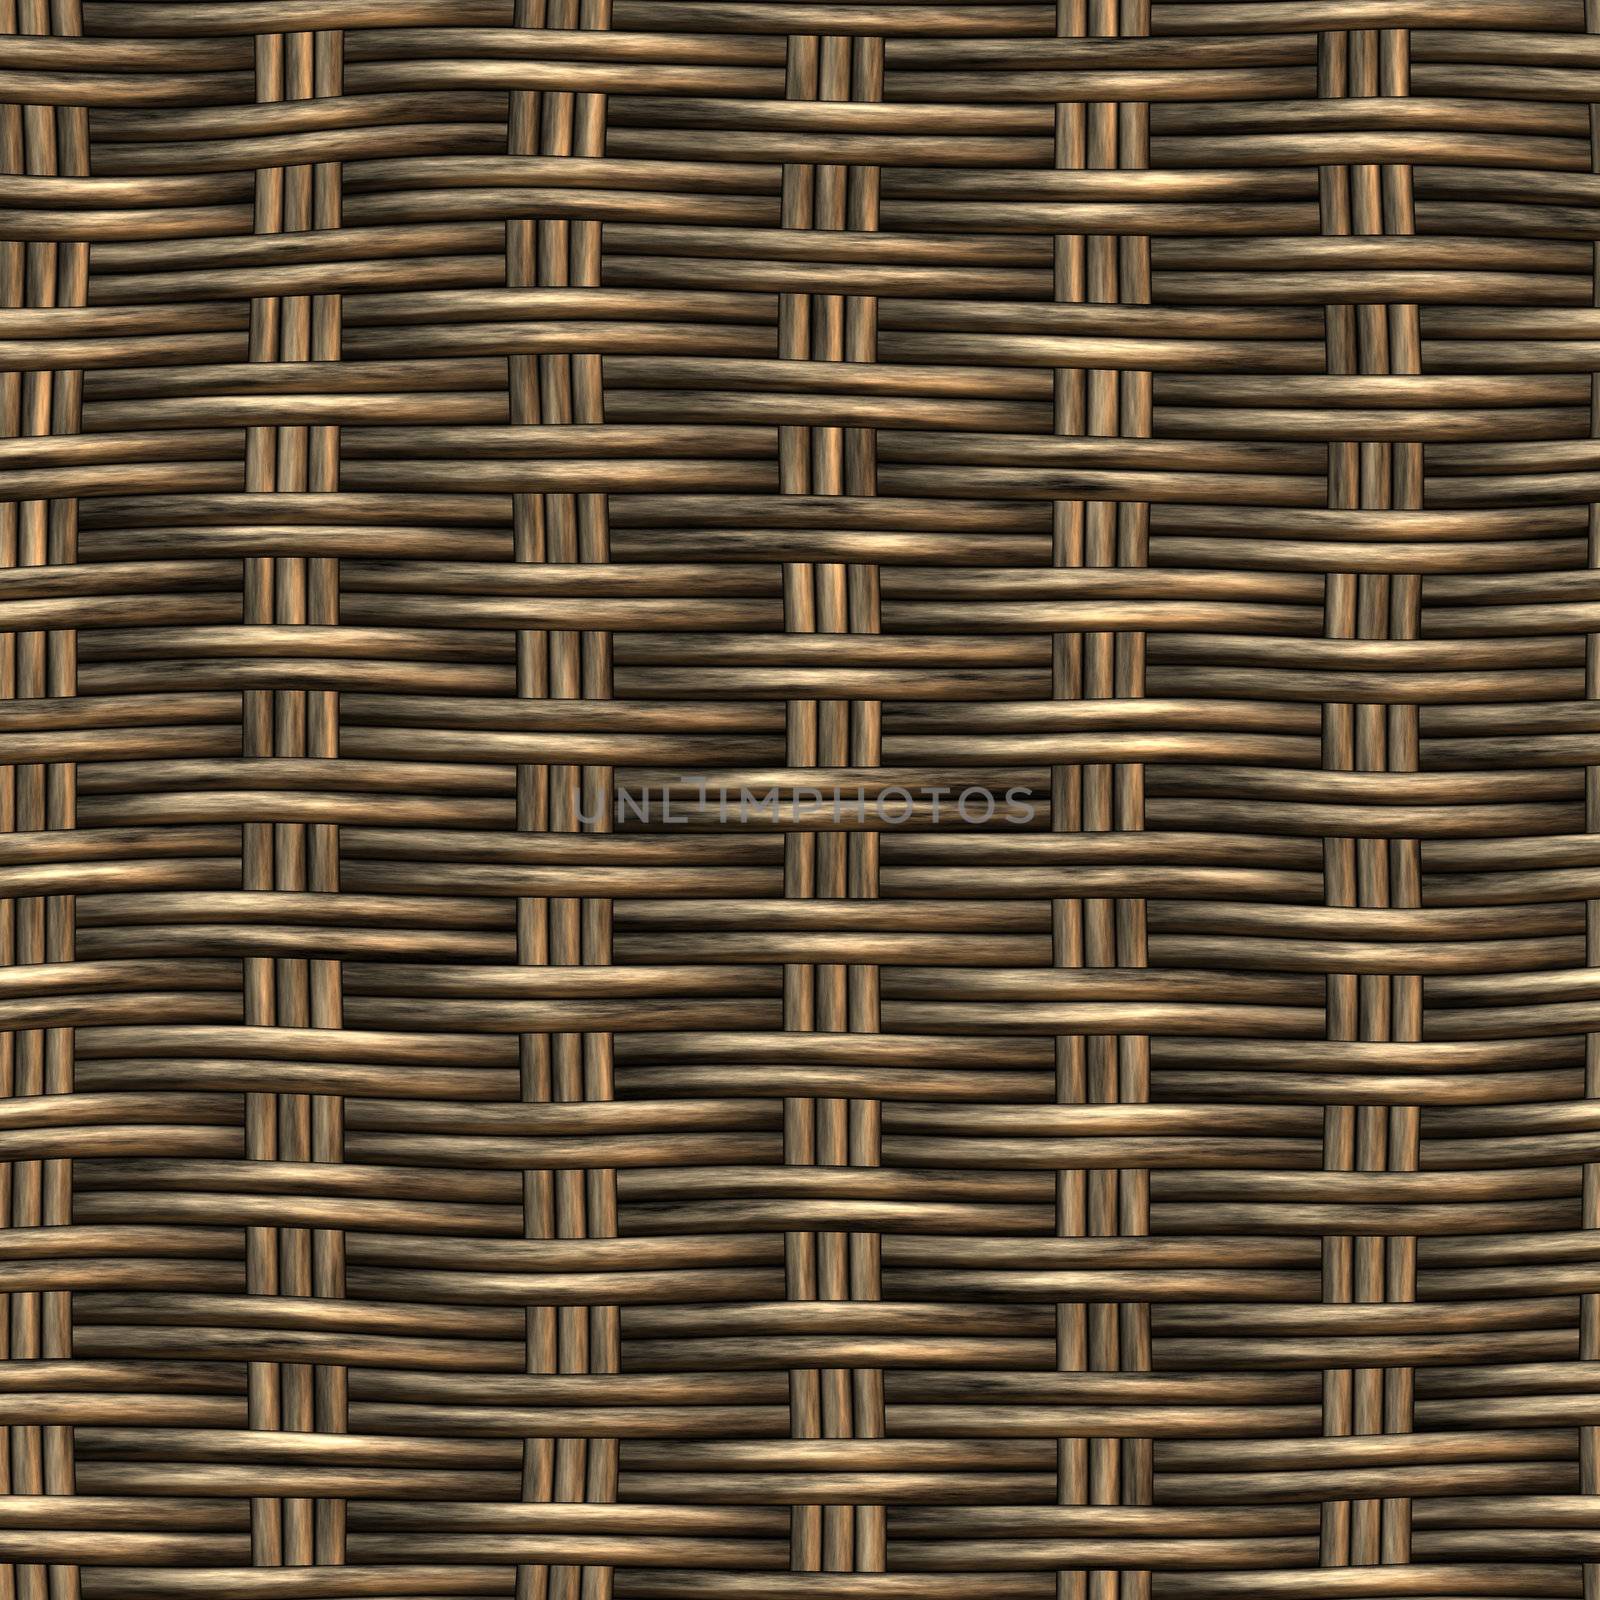 wicker basket weaving pattern, seamless texture for background

